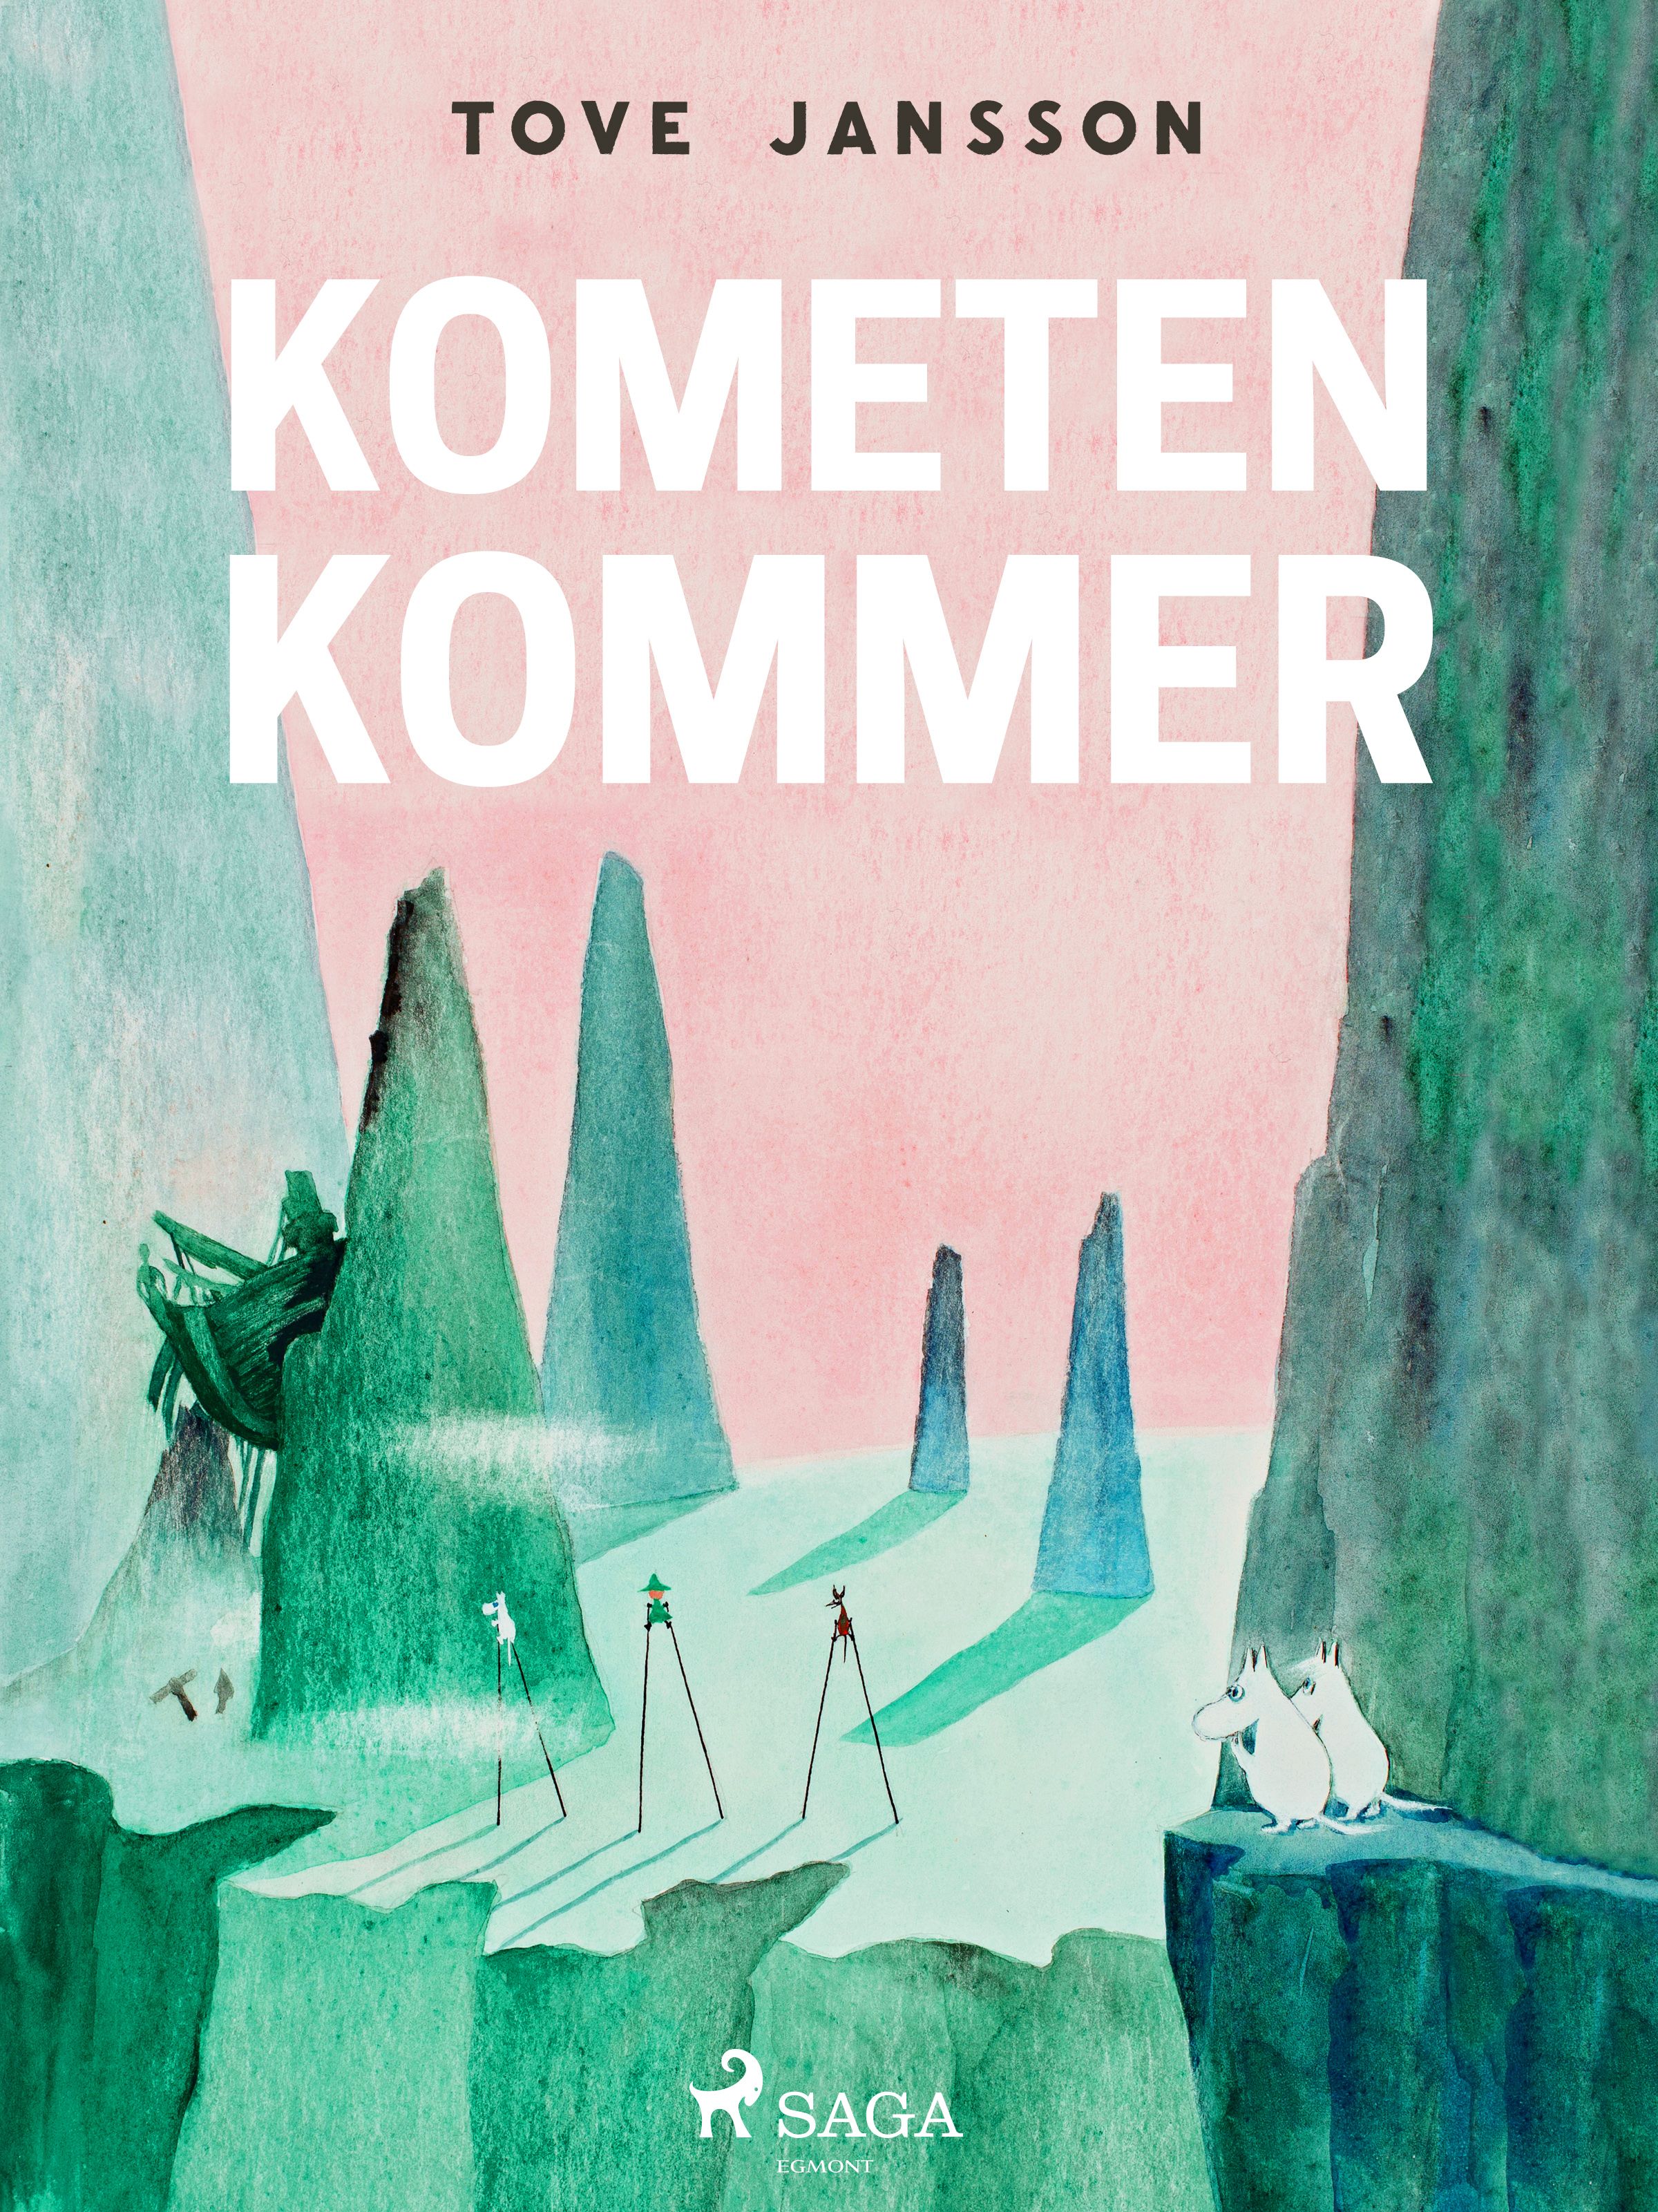 Mumitrolden 2 - Kometen kommer, audiobook by Tove Jansson